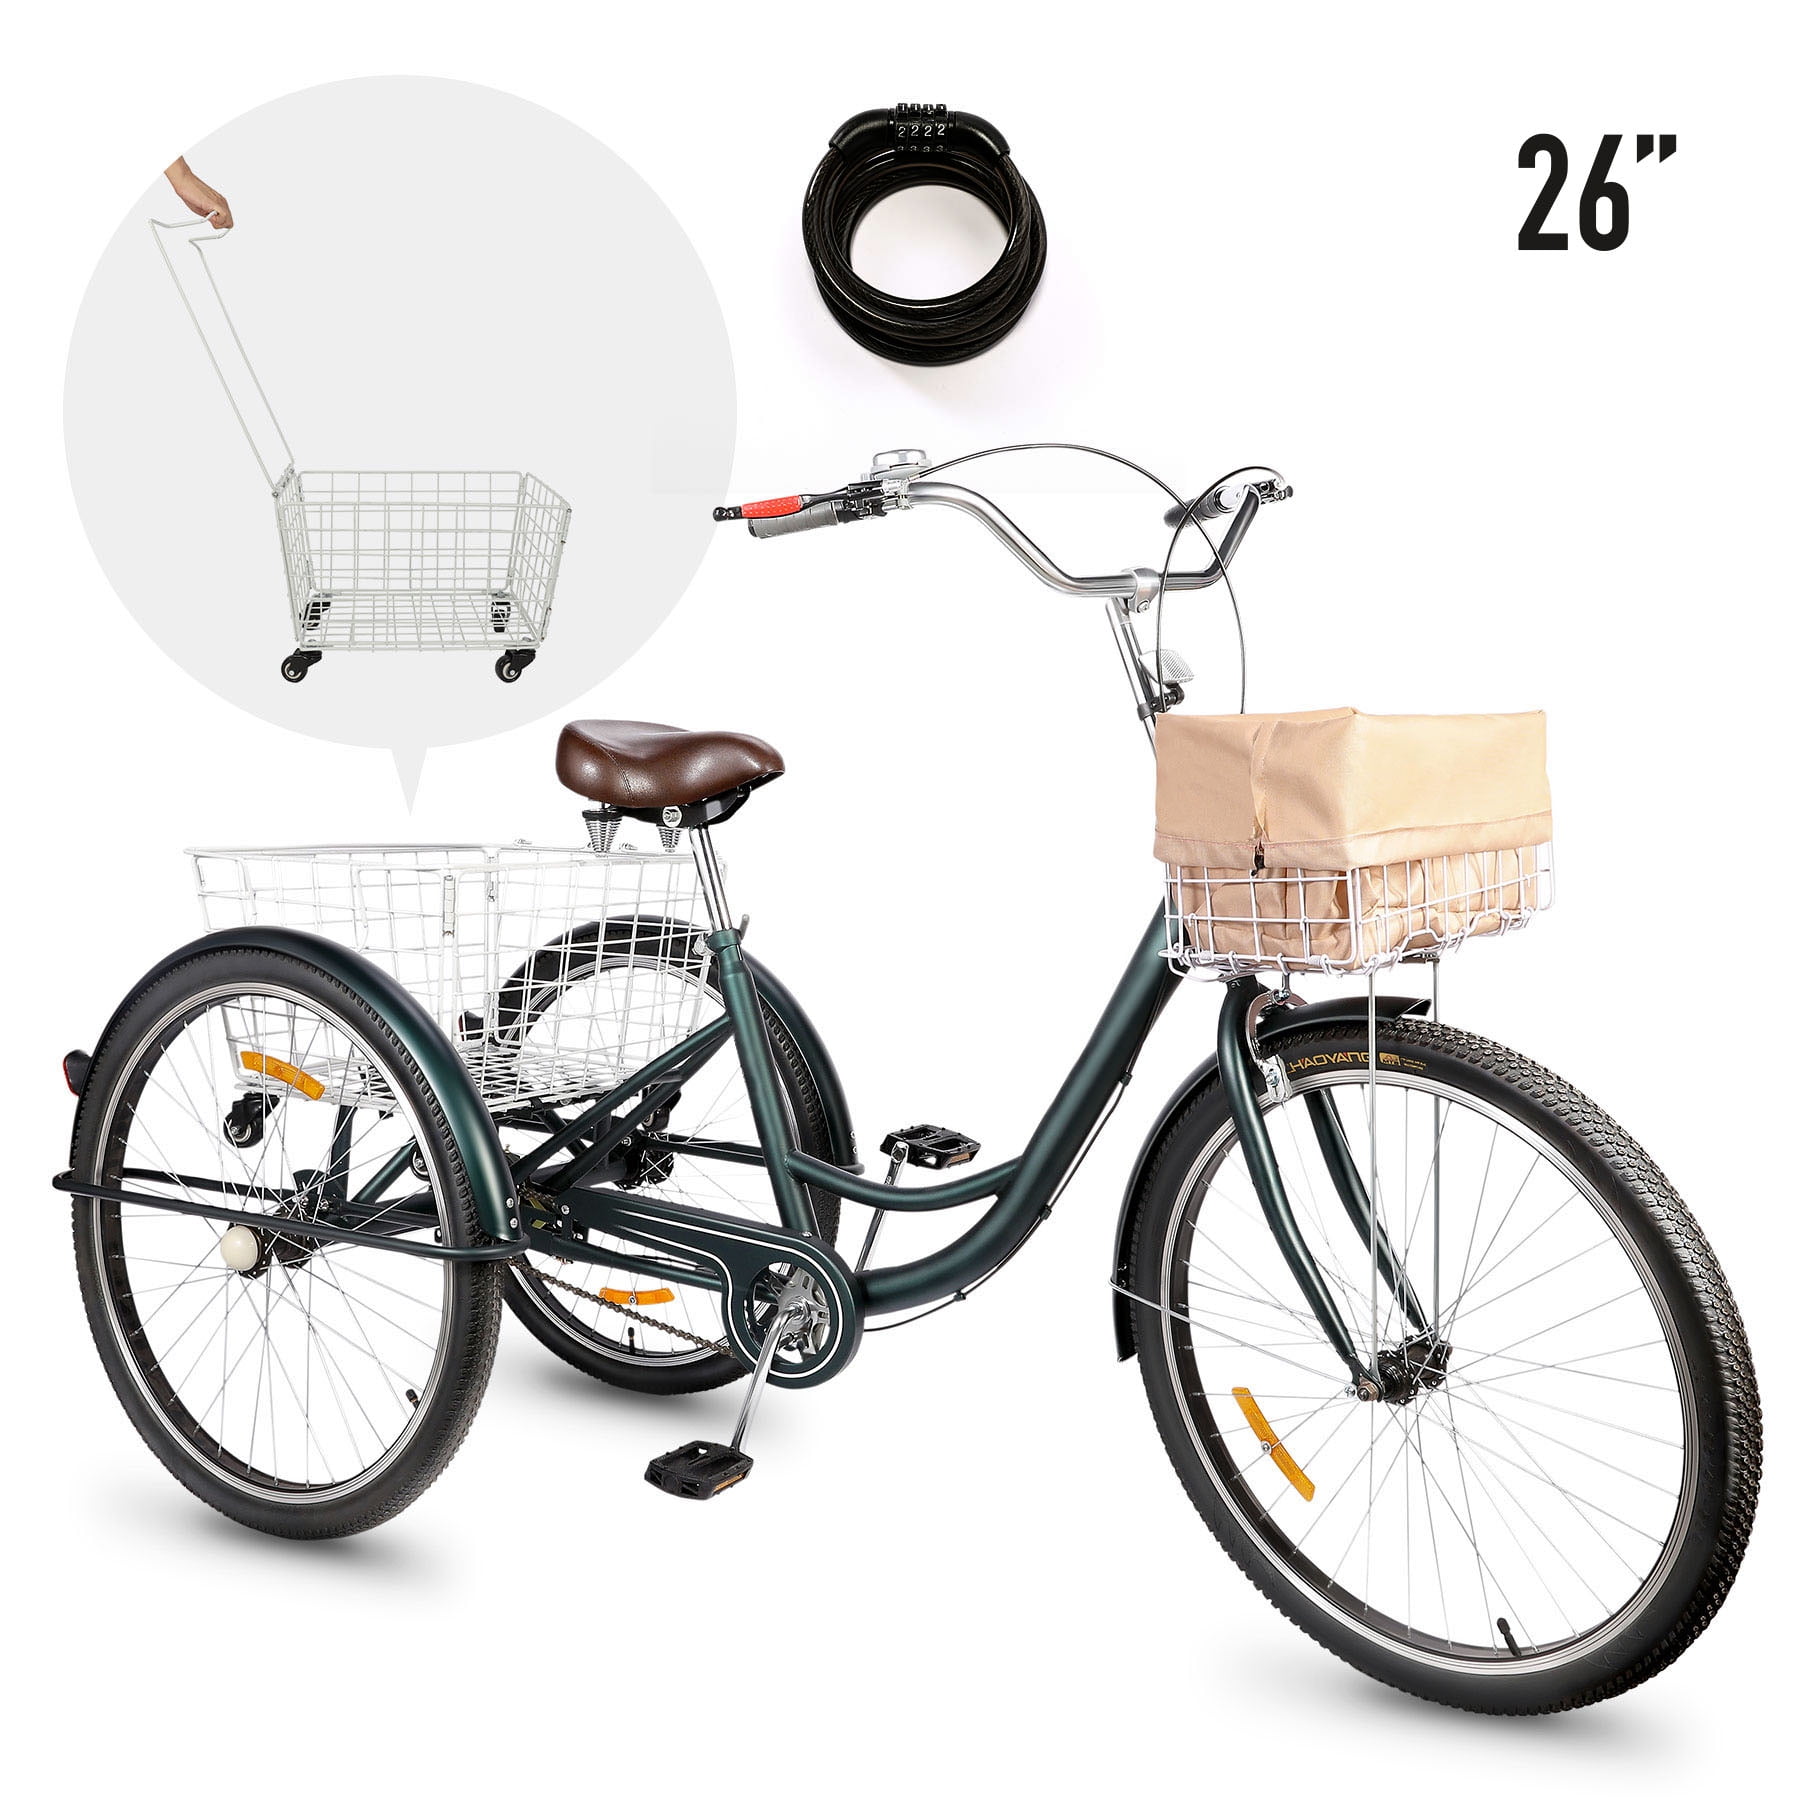 26" 3-Wheel Shimano 7-Speed Adult Tricycle Trike Bicycle Cruise Black Frame 